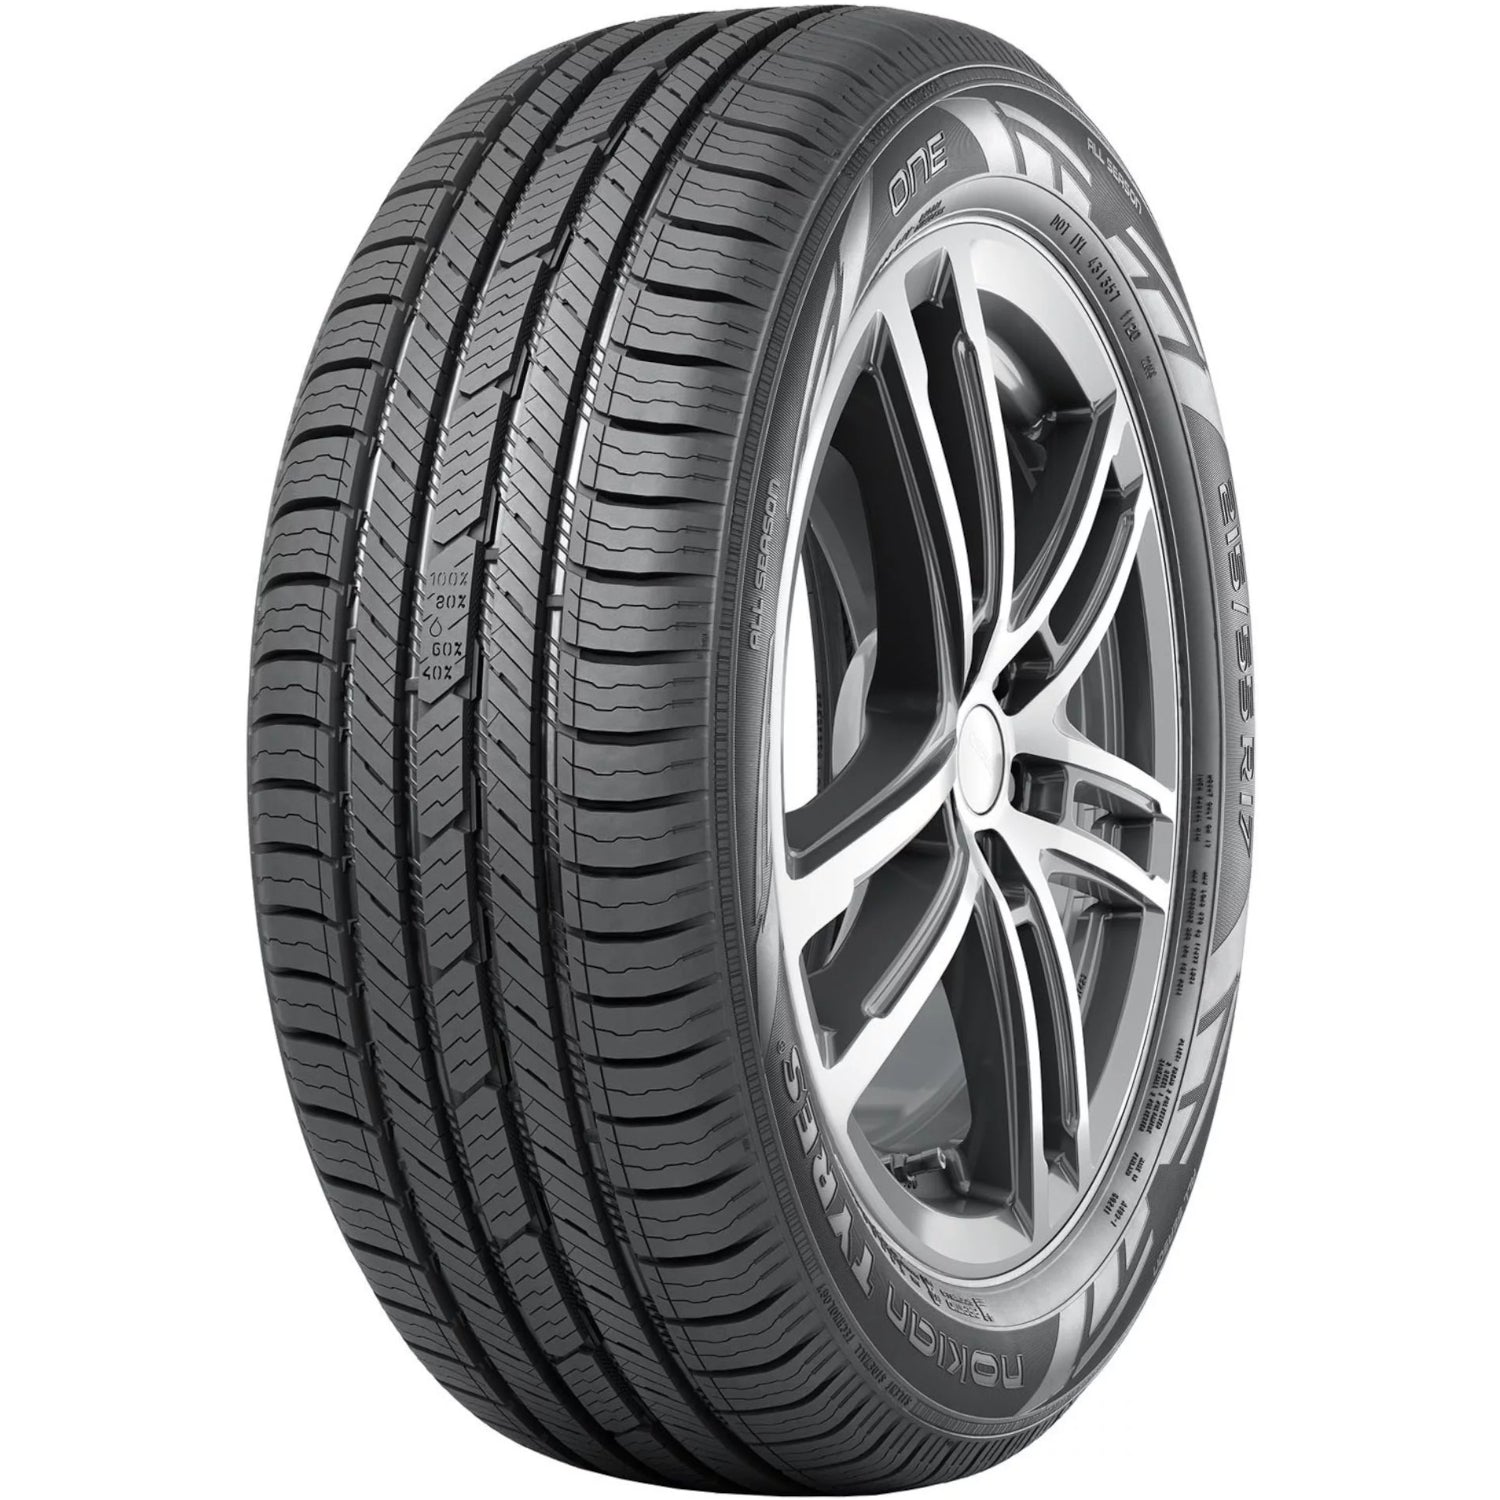 NOKIAN ONE 215/60R16 (26.1X8.5R 16) Tires